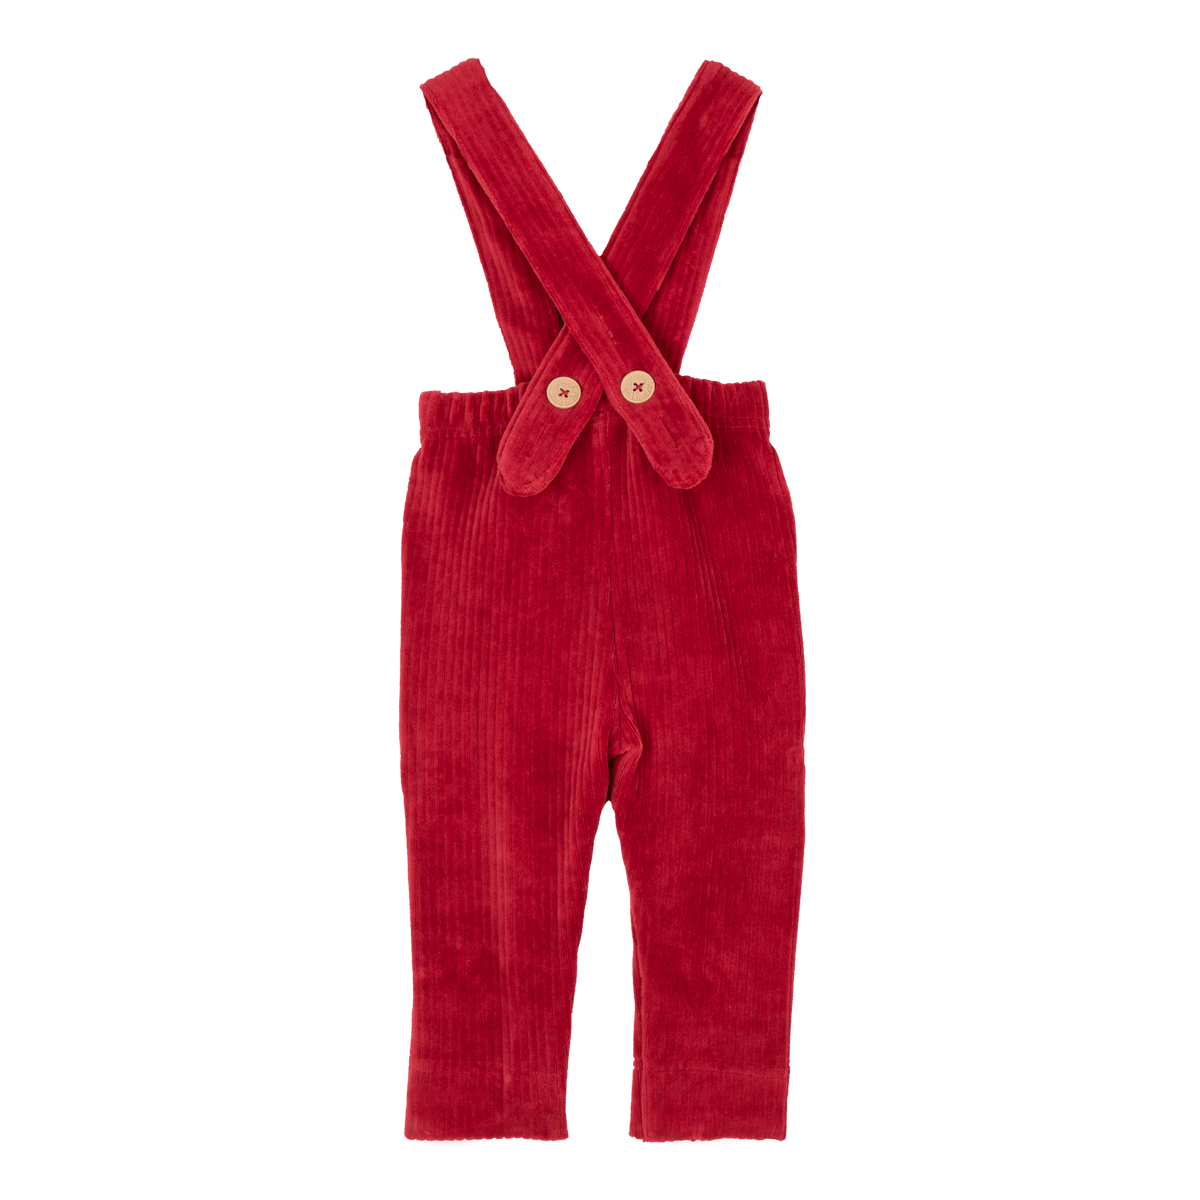 Ruu-housut vauvalle, punainen